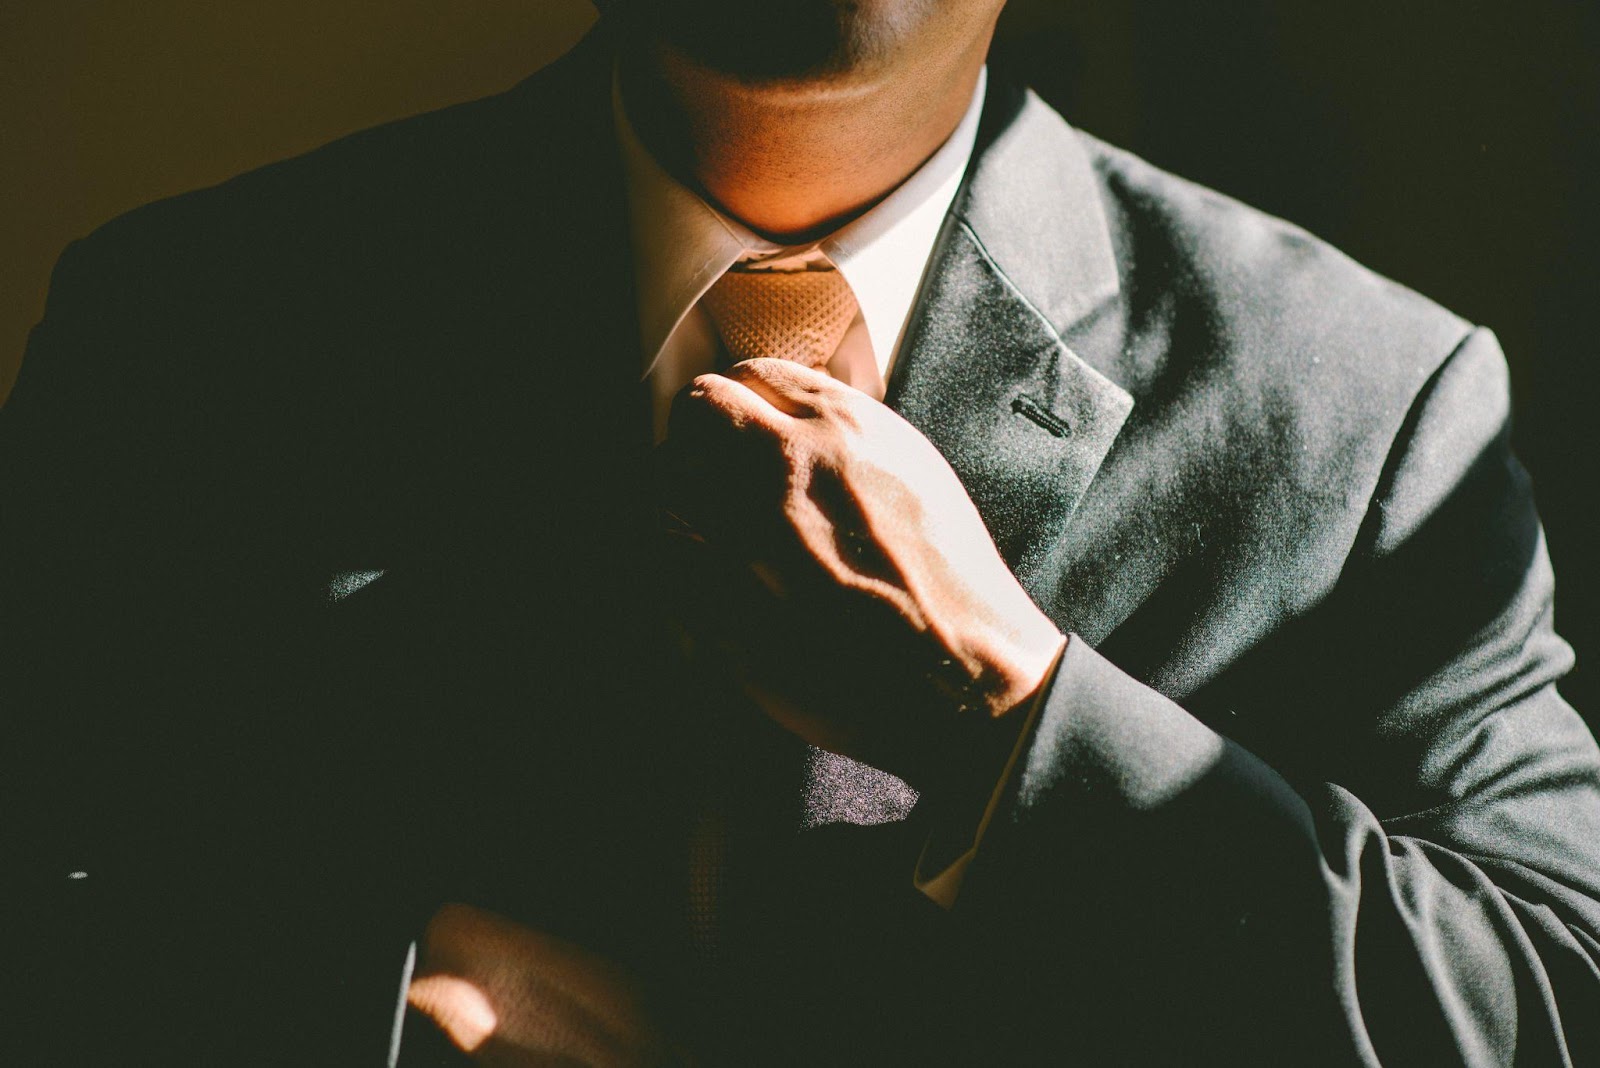 A businessman similar to Elijah Norton straightens his tie